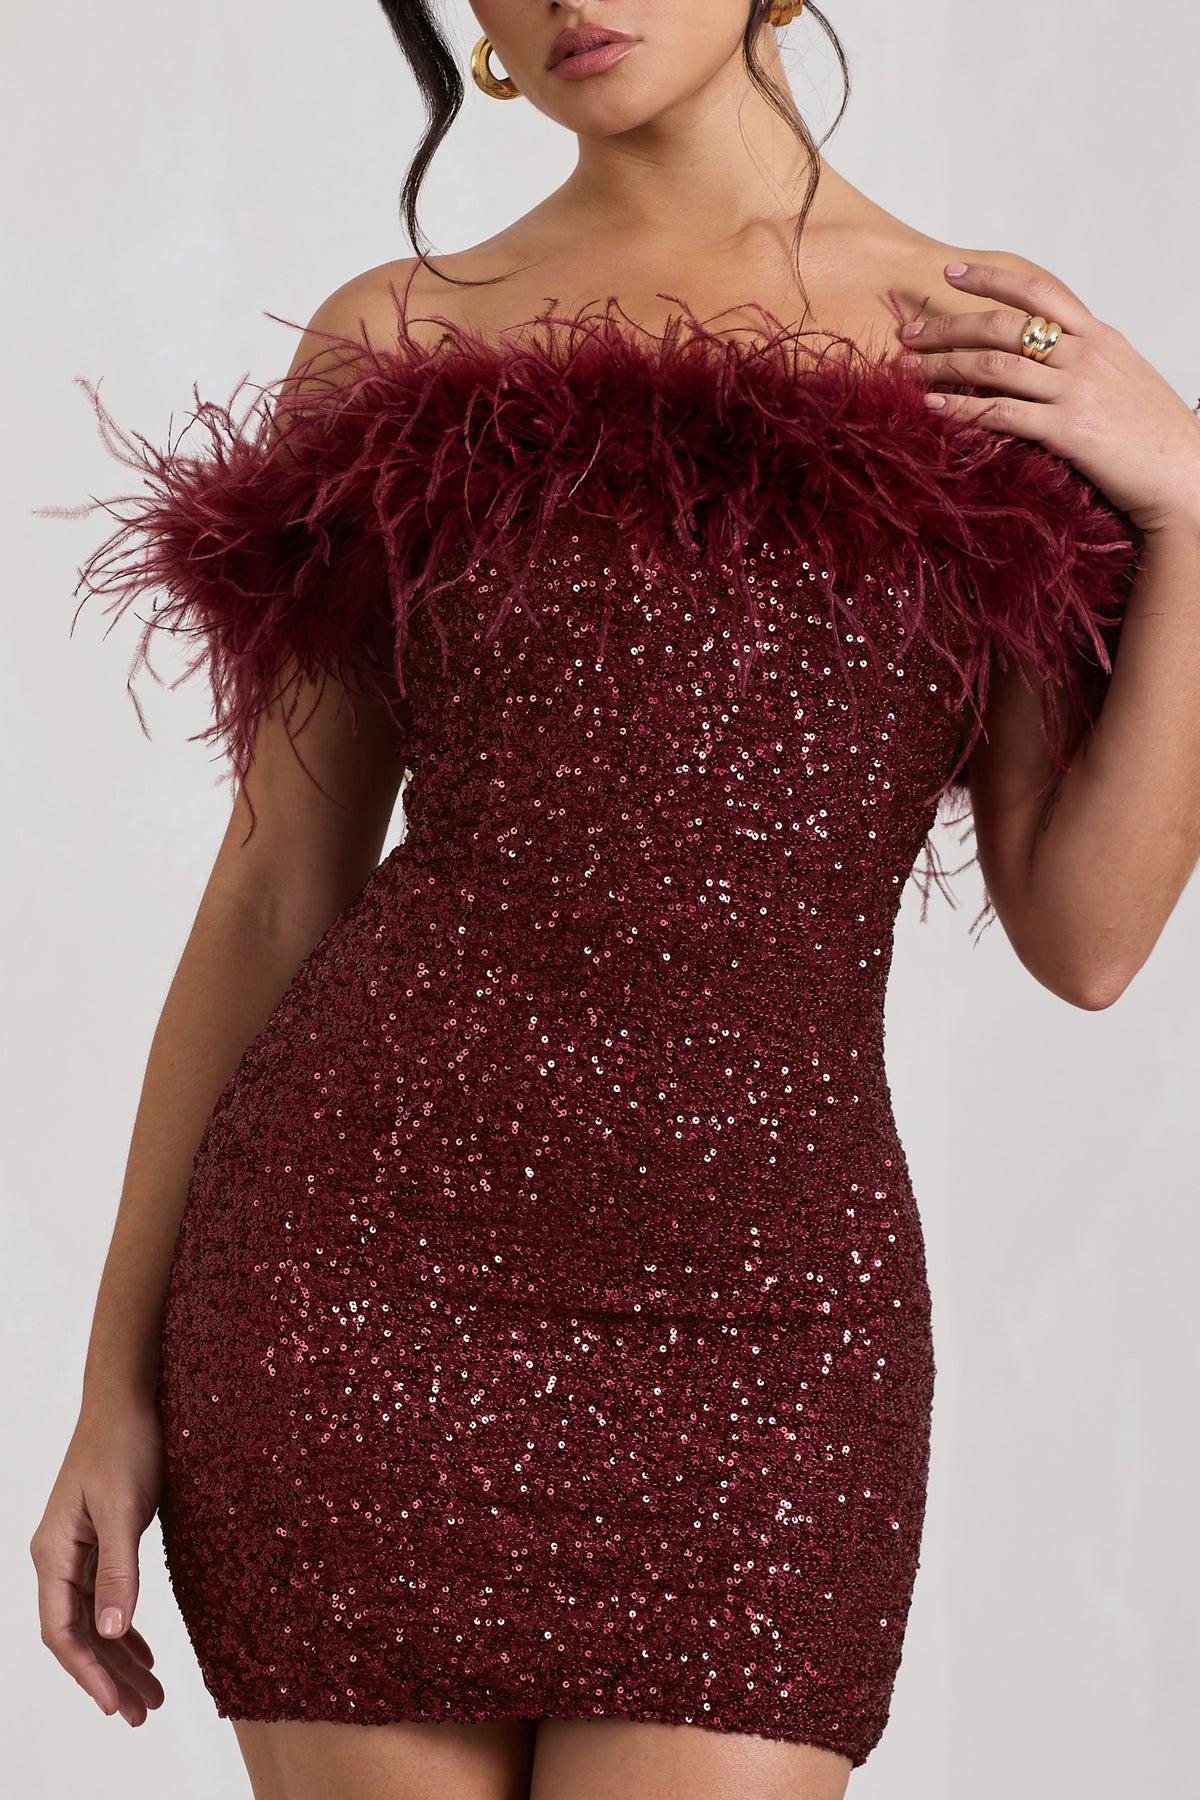 New Money | Burgundy Bodycon Sequin Mini Dress with Feather Trim, US 4 / Burgundy